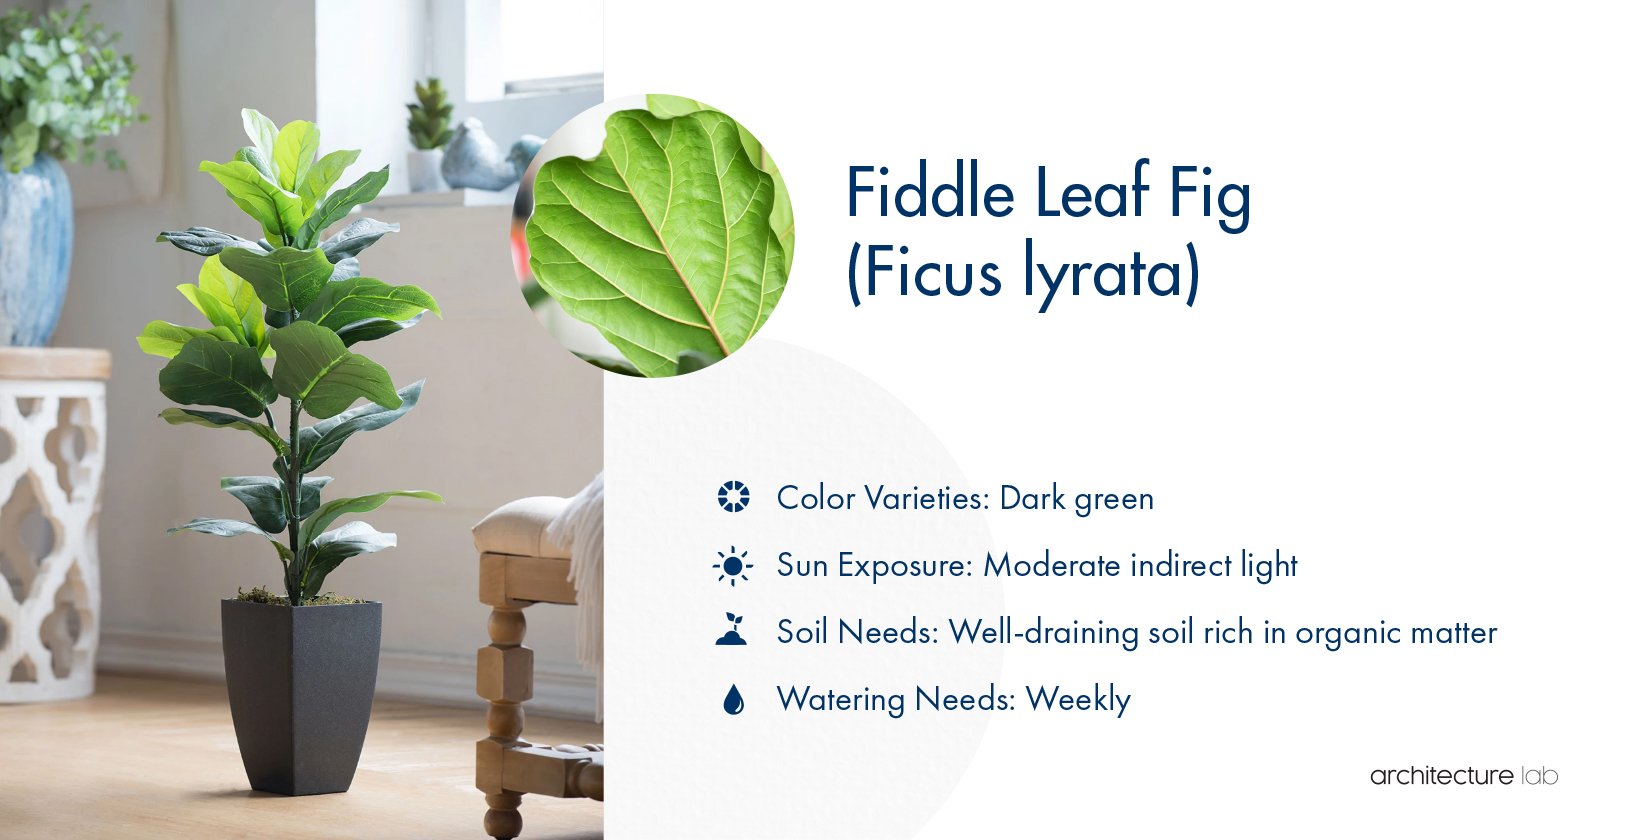 20. Fiddle leaf fig (ficus lyrata)